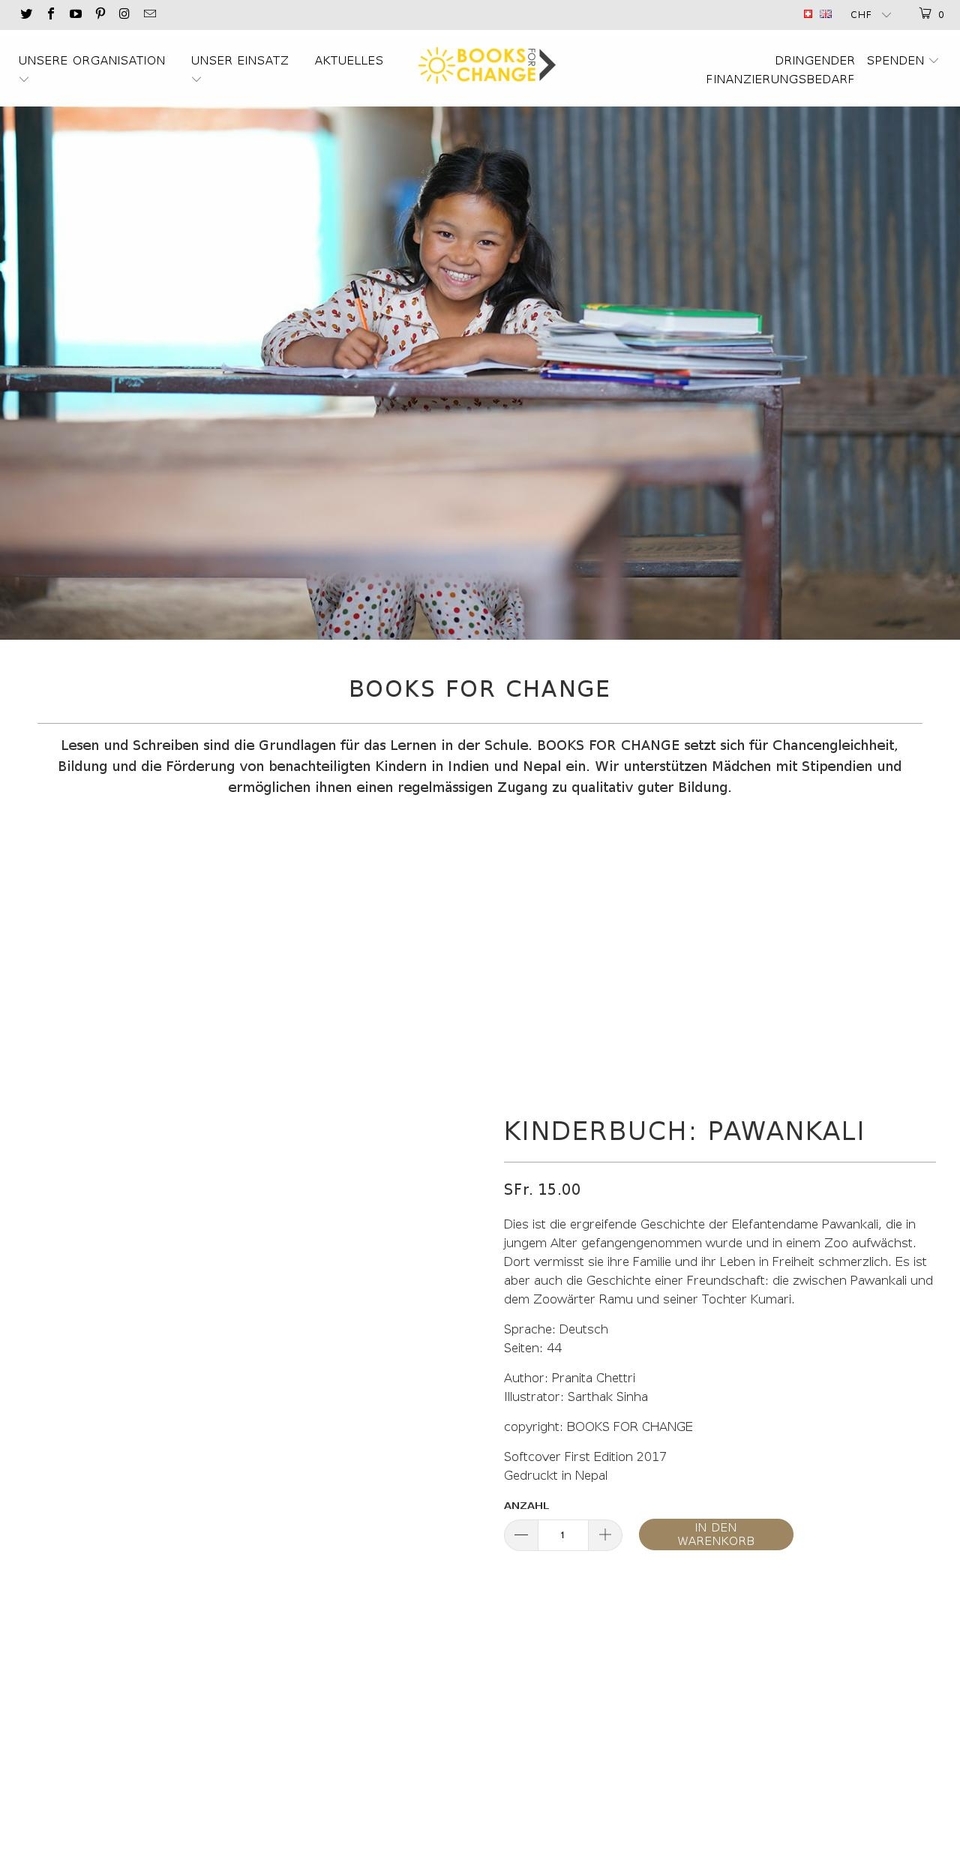 booksforchange.org shopify website screenshot